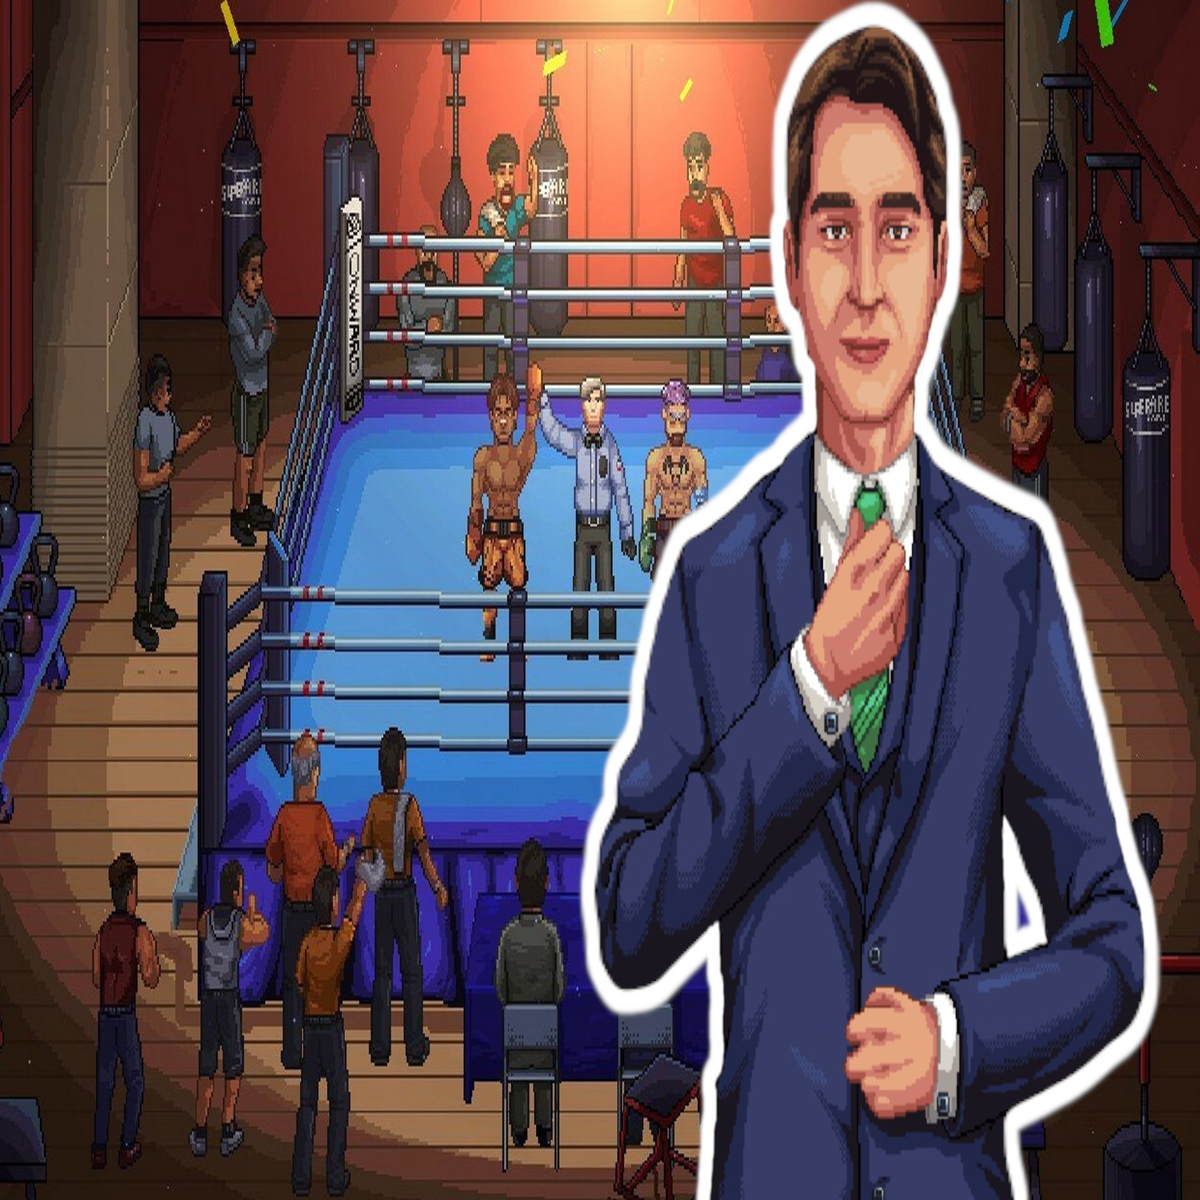 World Championship Boxing Manager™ 2 / Ziggurat Games